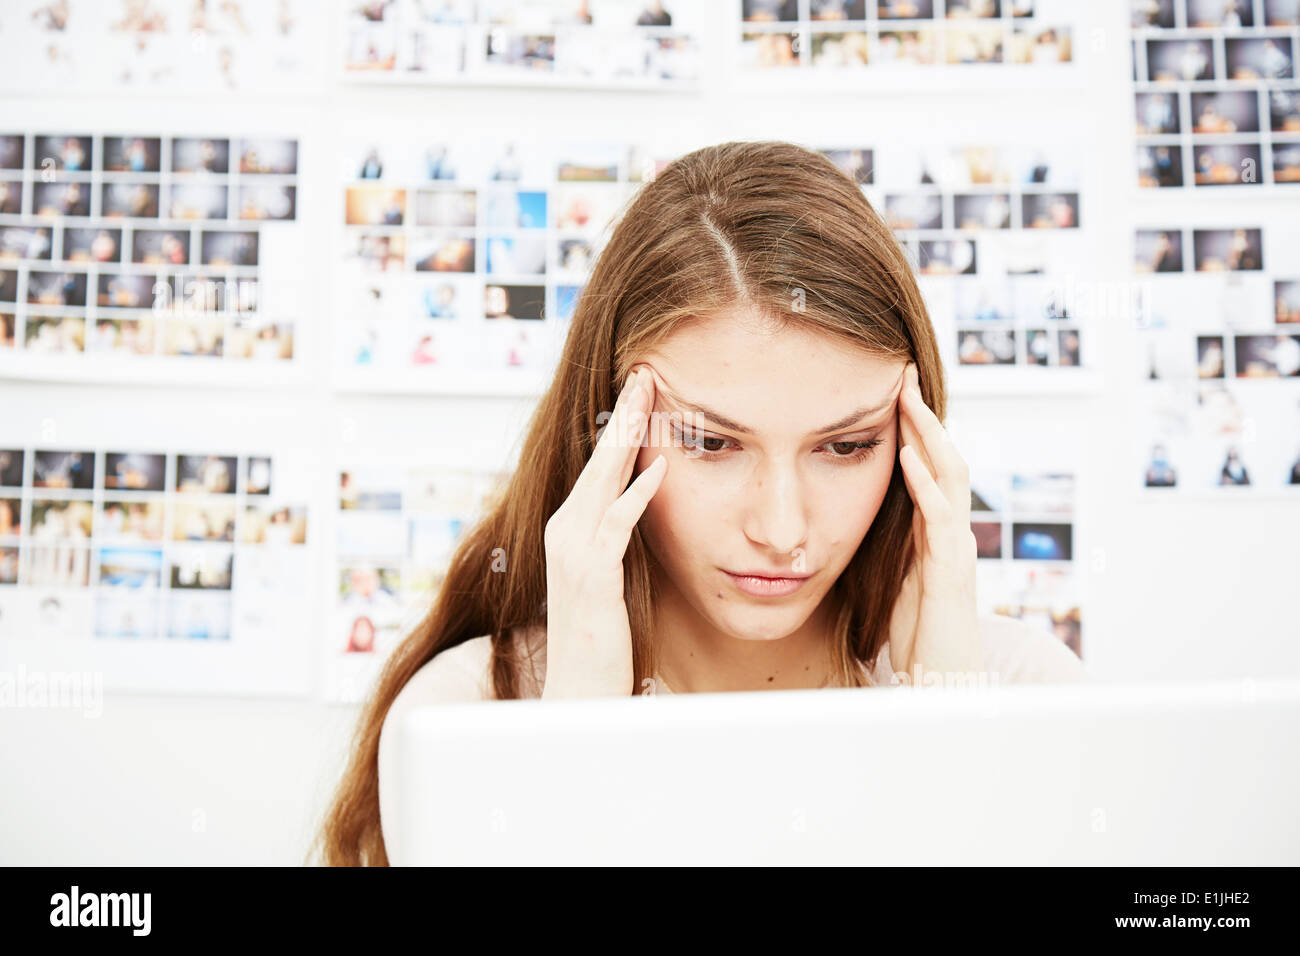 Young woman using computer rubbing head Stock Photo